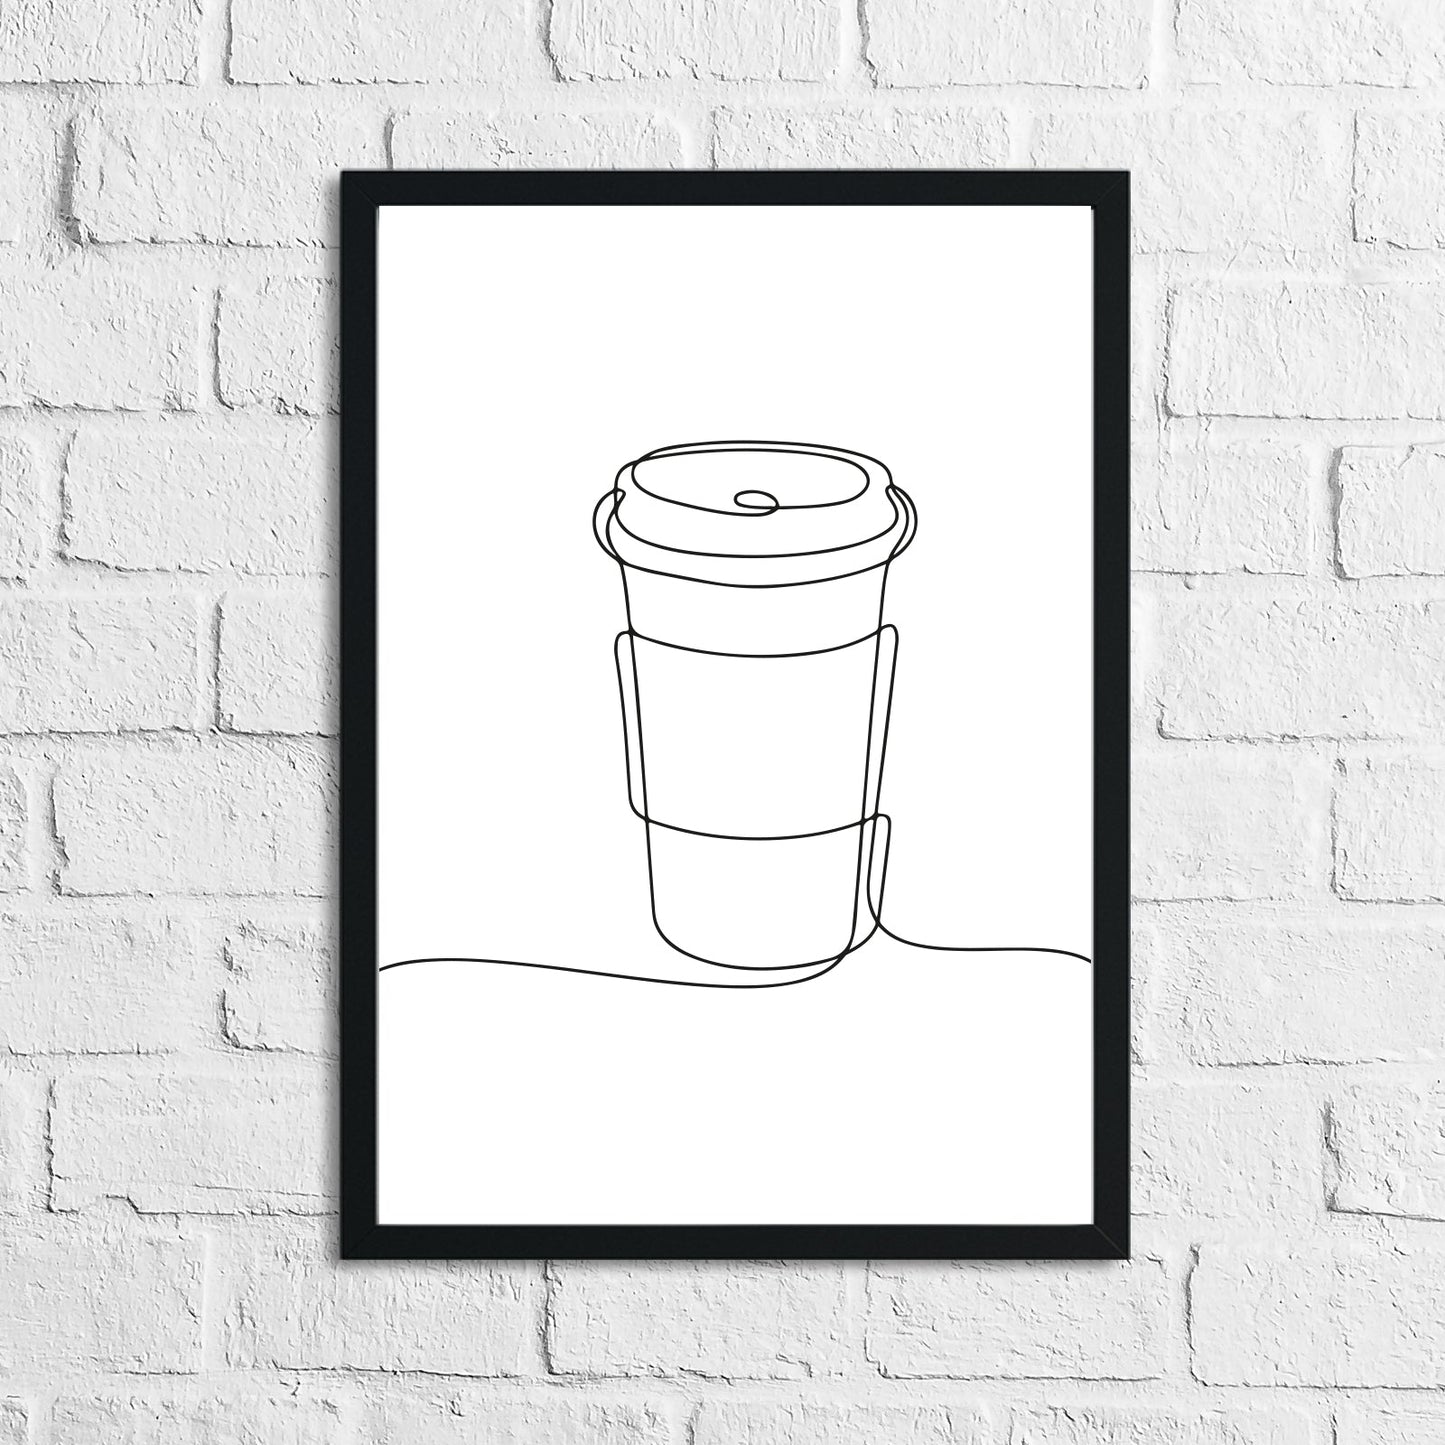 Travel Mug Simple Line Work Kitchen Wall Decor Print